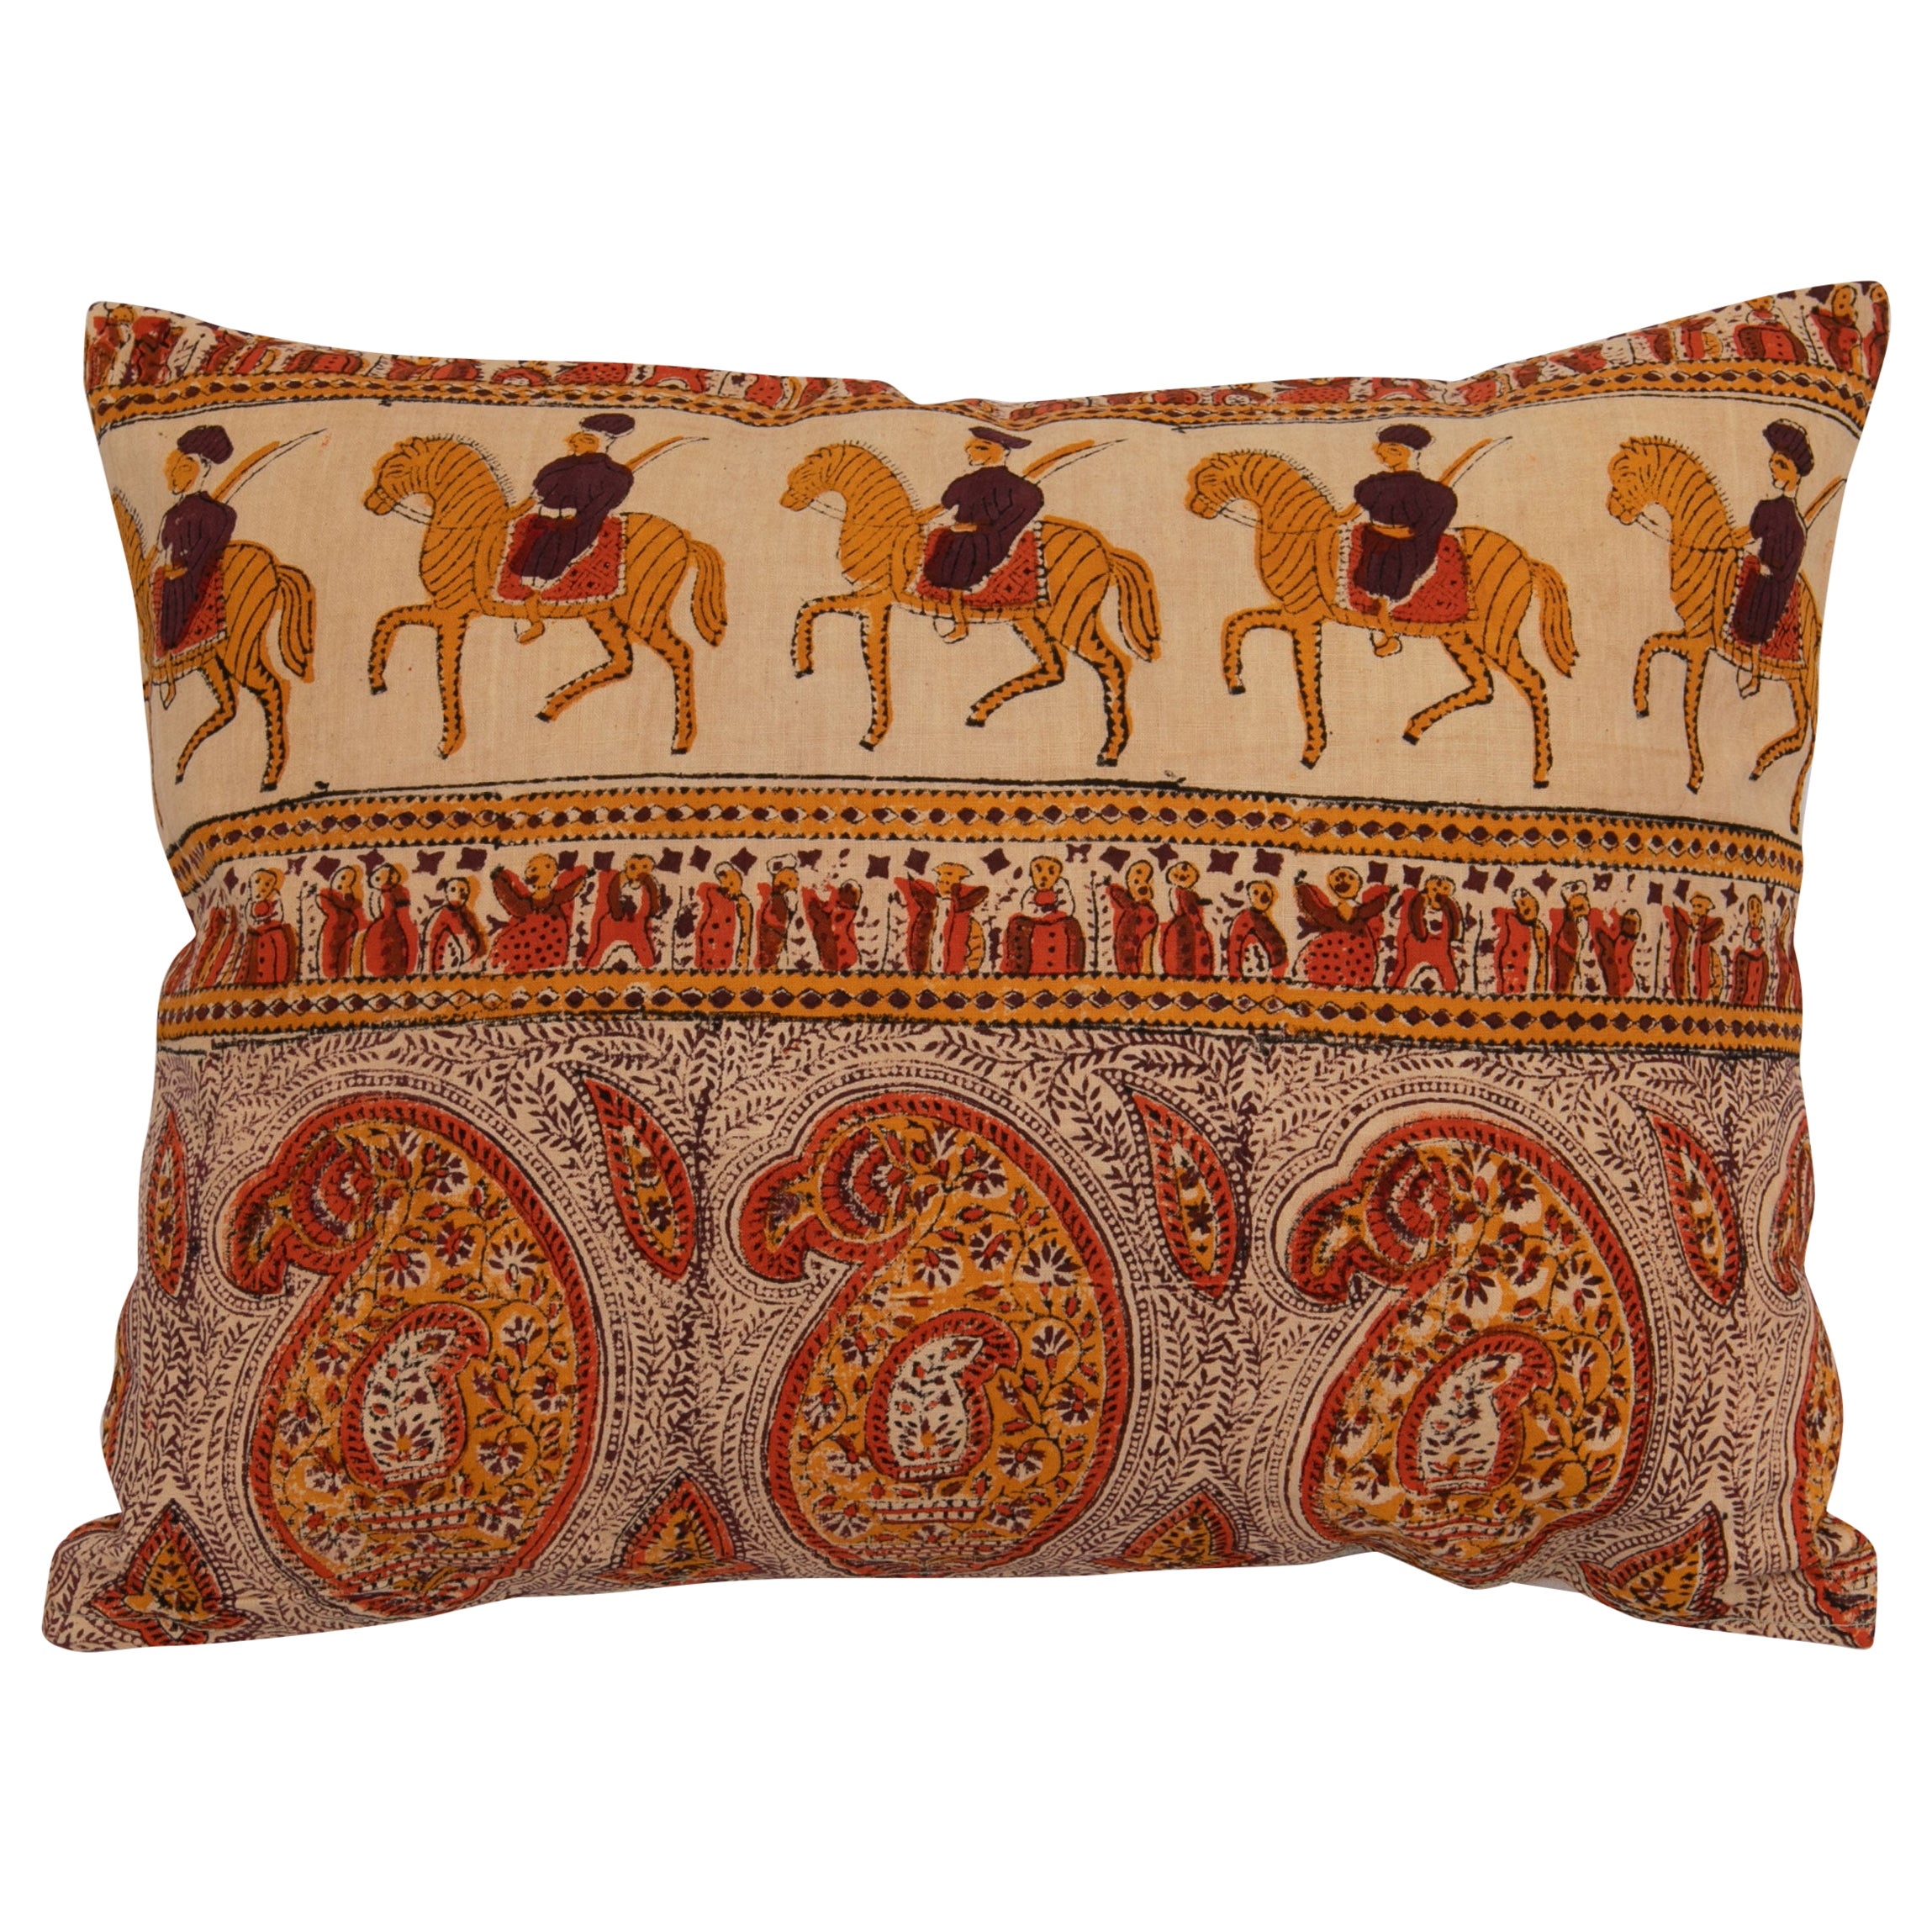 Pillow Case Made from an Indian Kalamkari, Early 20th C